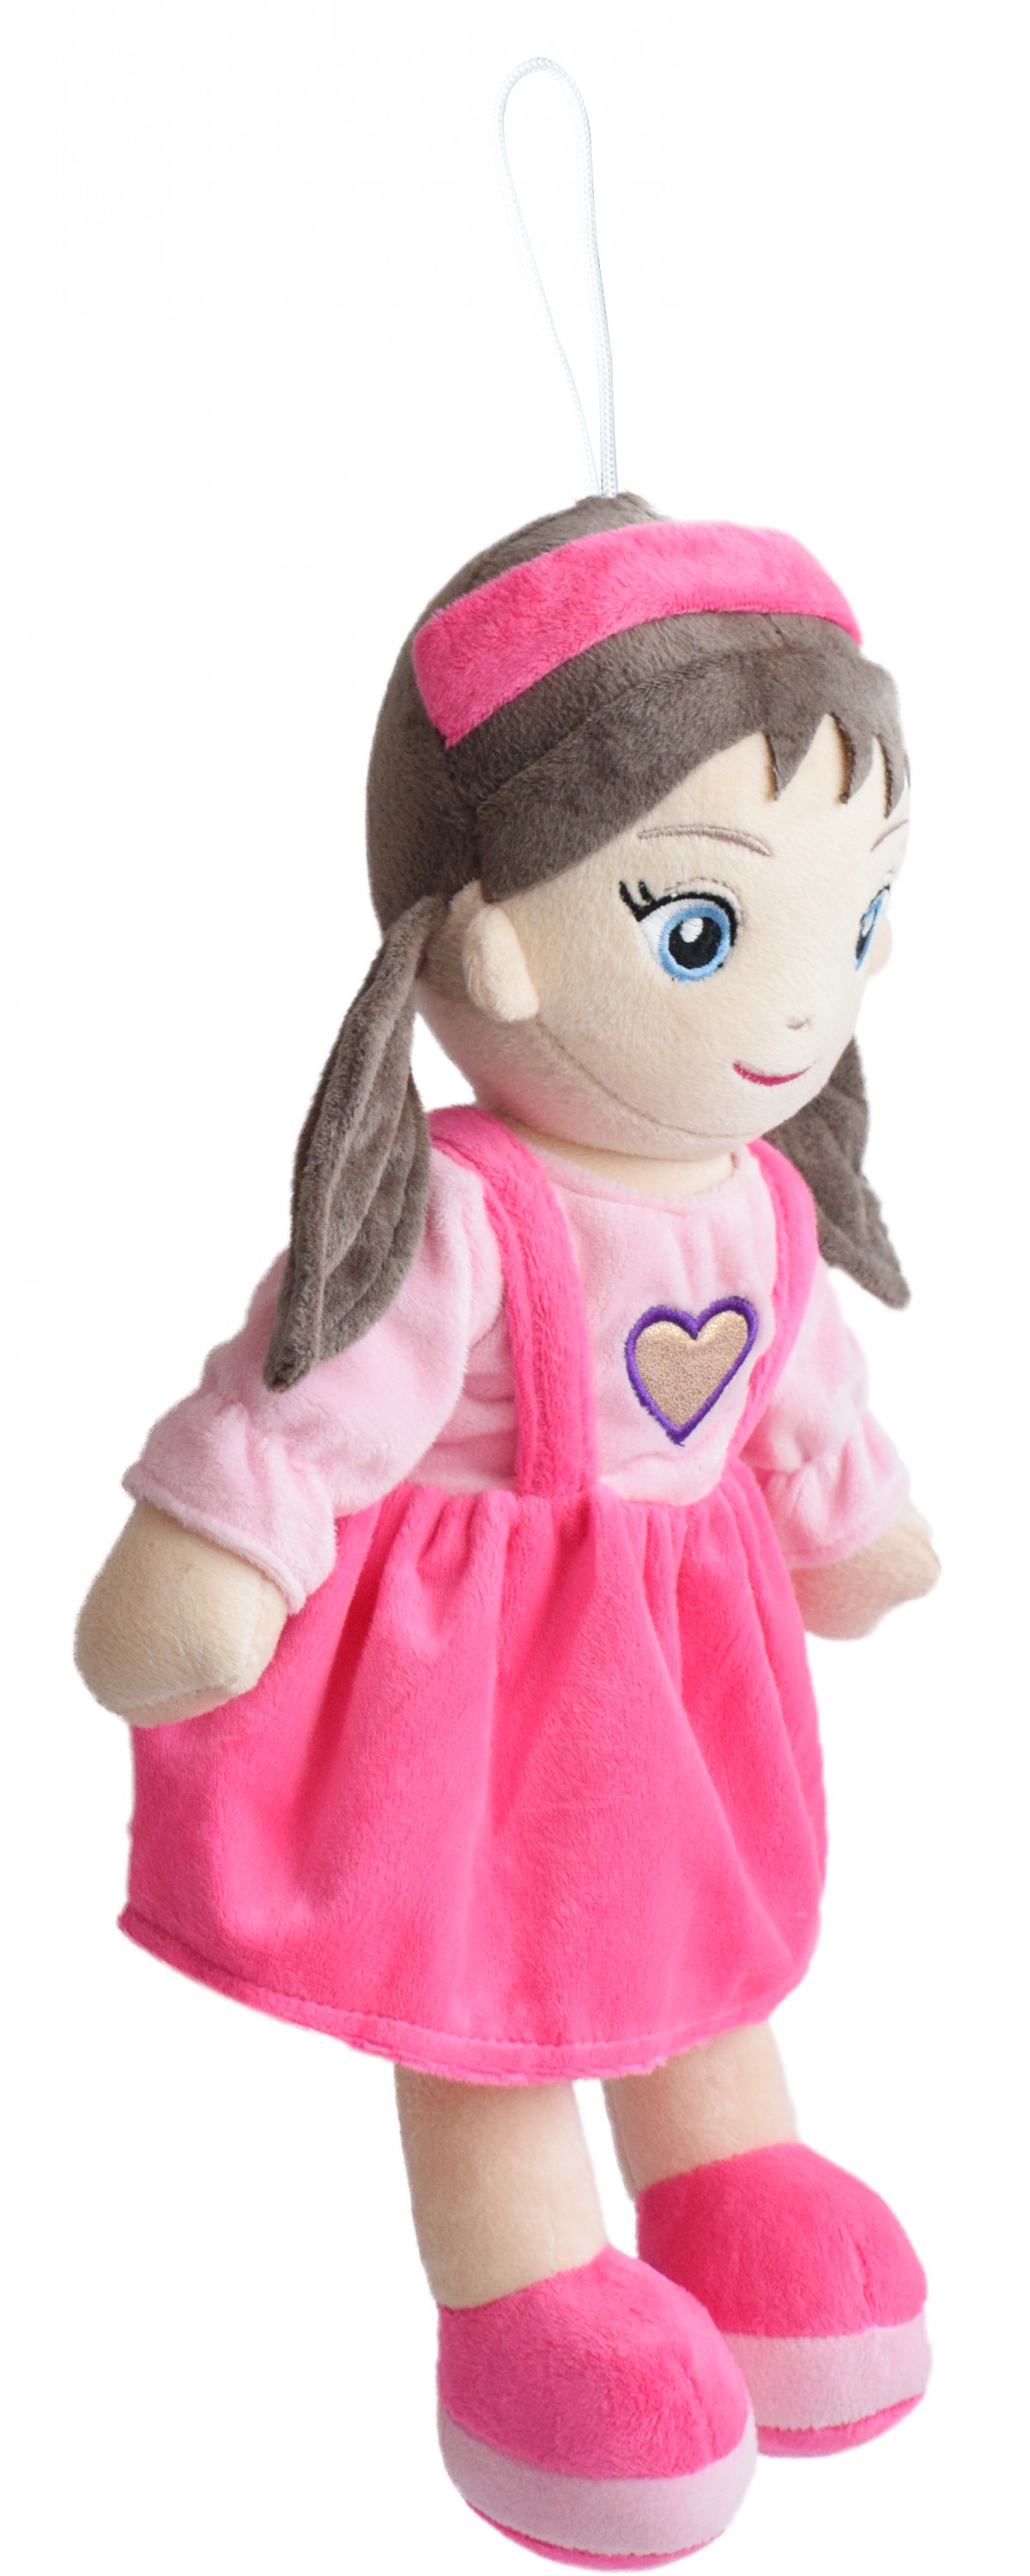 Plush Cute Super Soft Toy Huggable Doll By Mirada, 38Cm, Pink